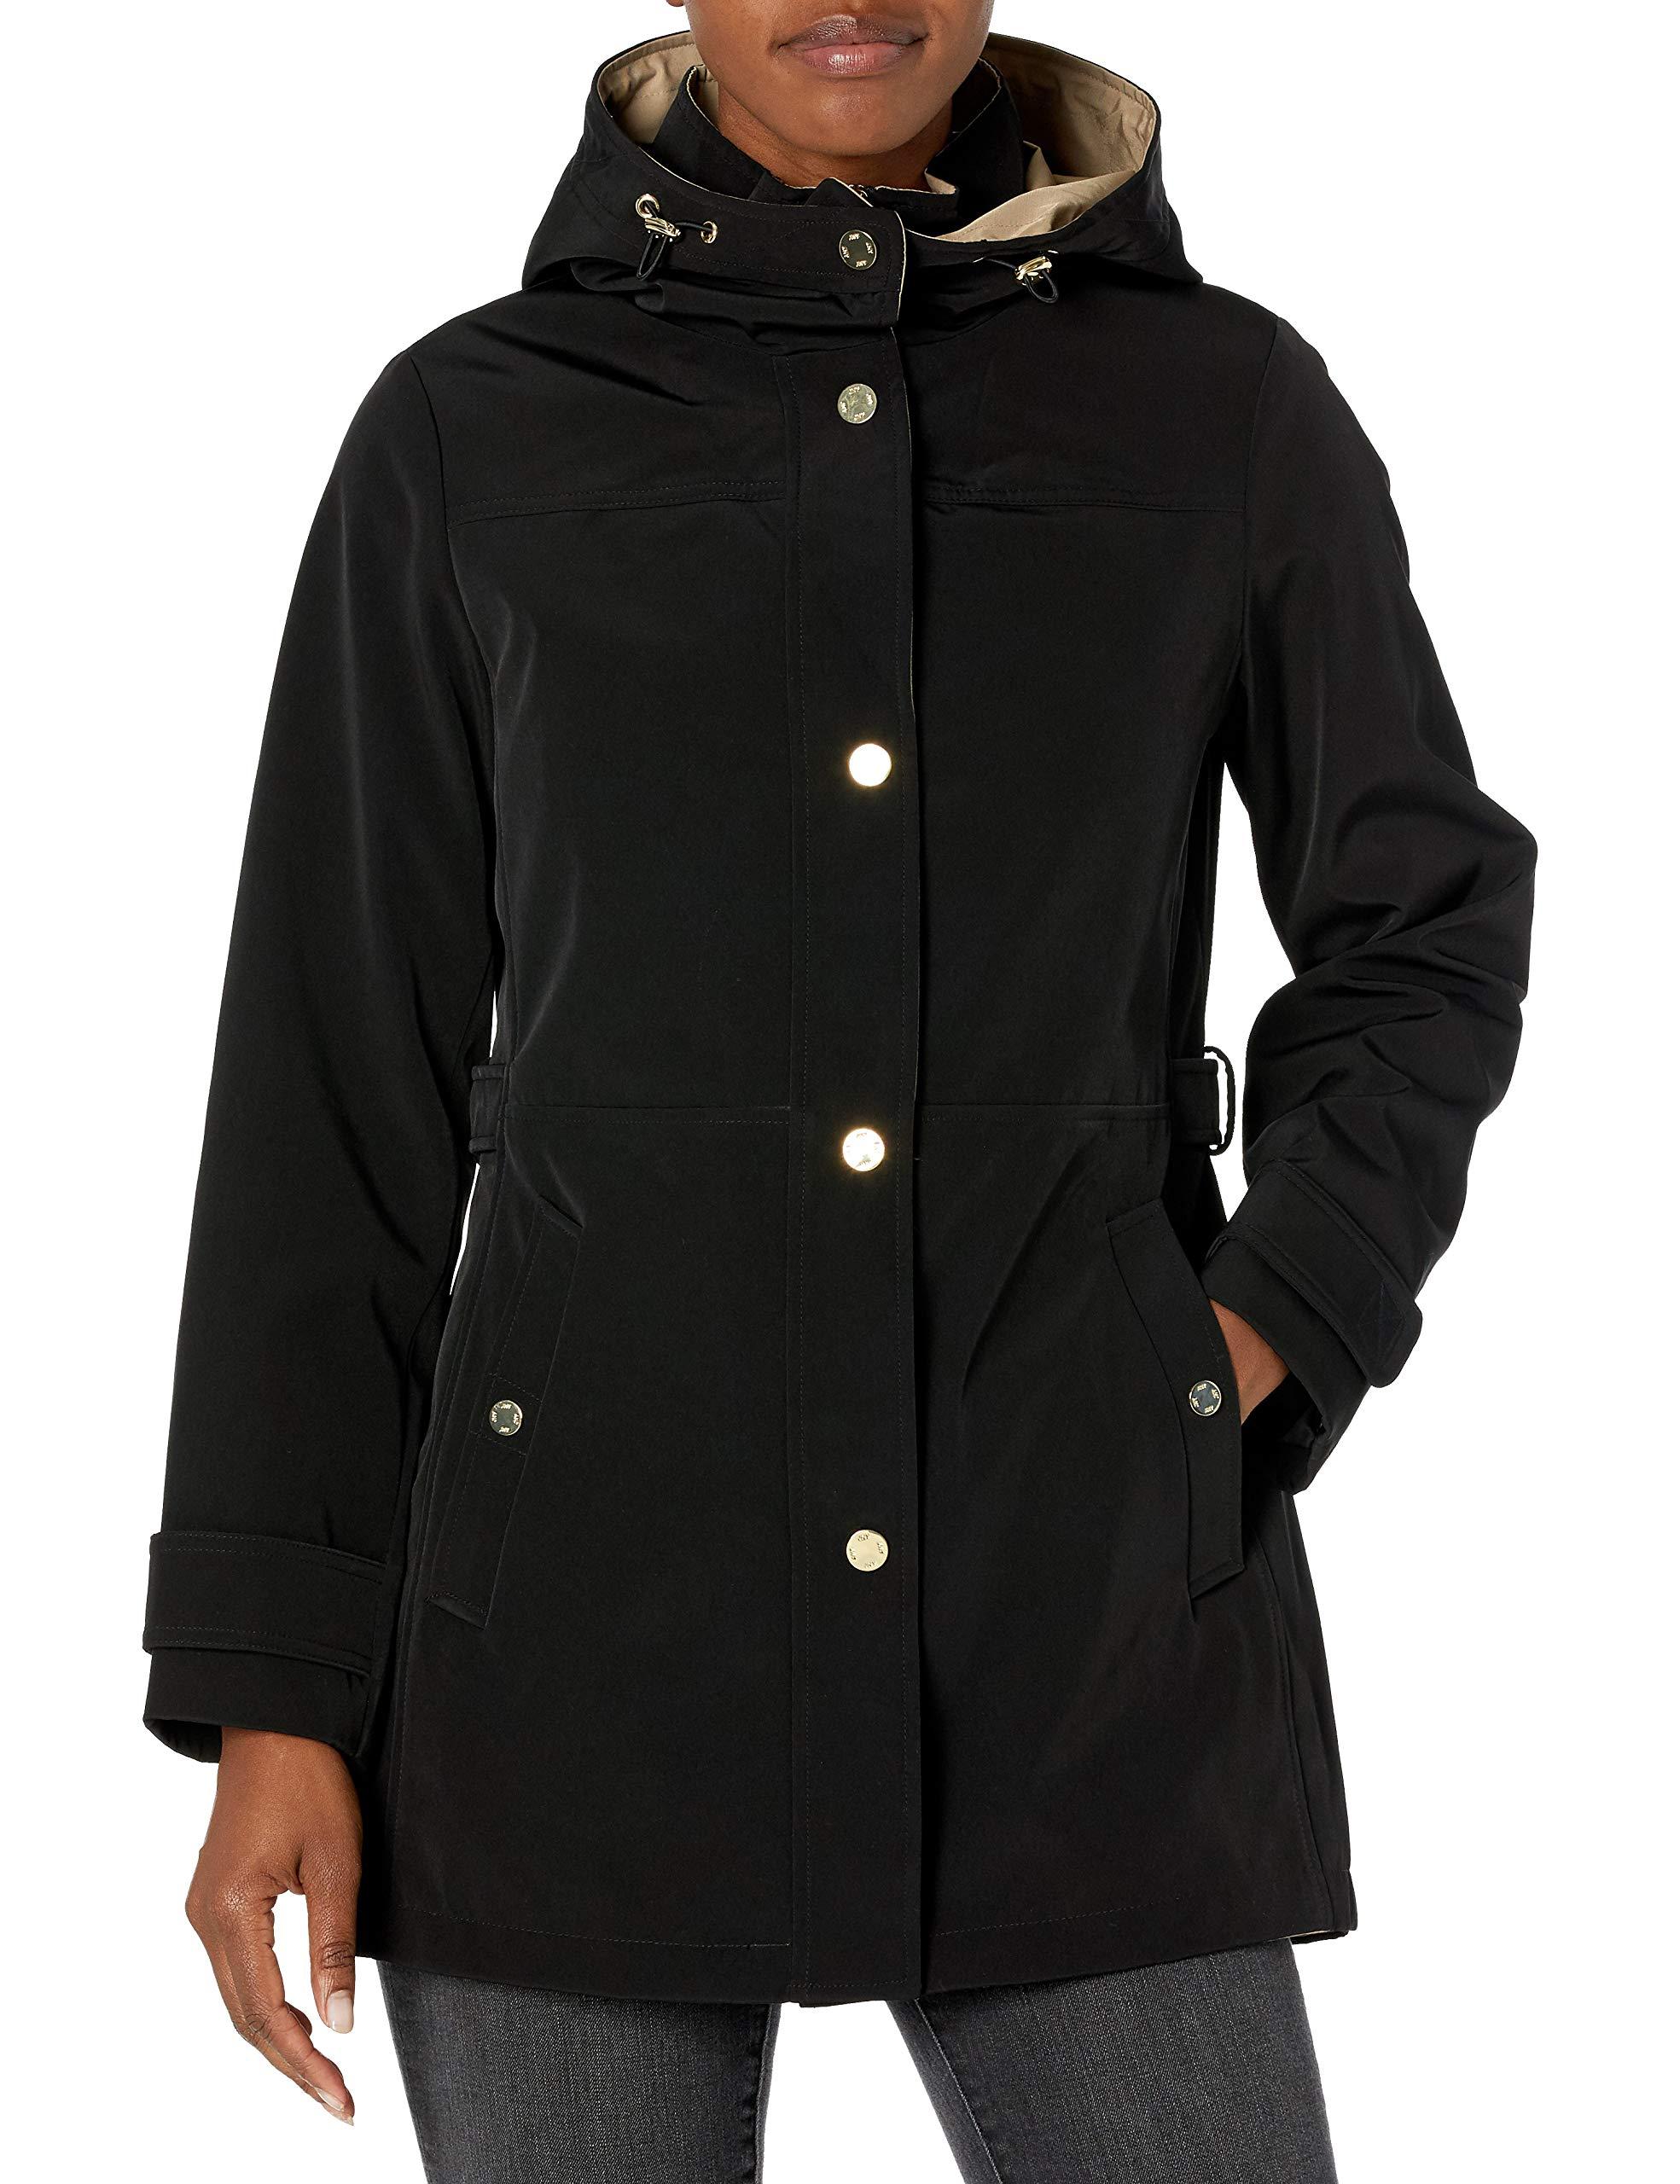 Jones New York Hooded Trench Coat Rain Jacket in Black | Lyst